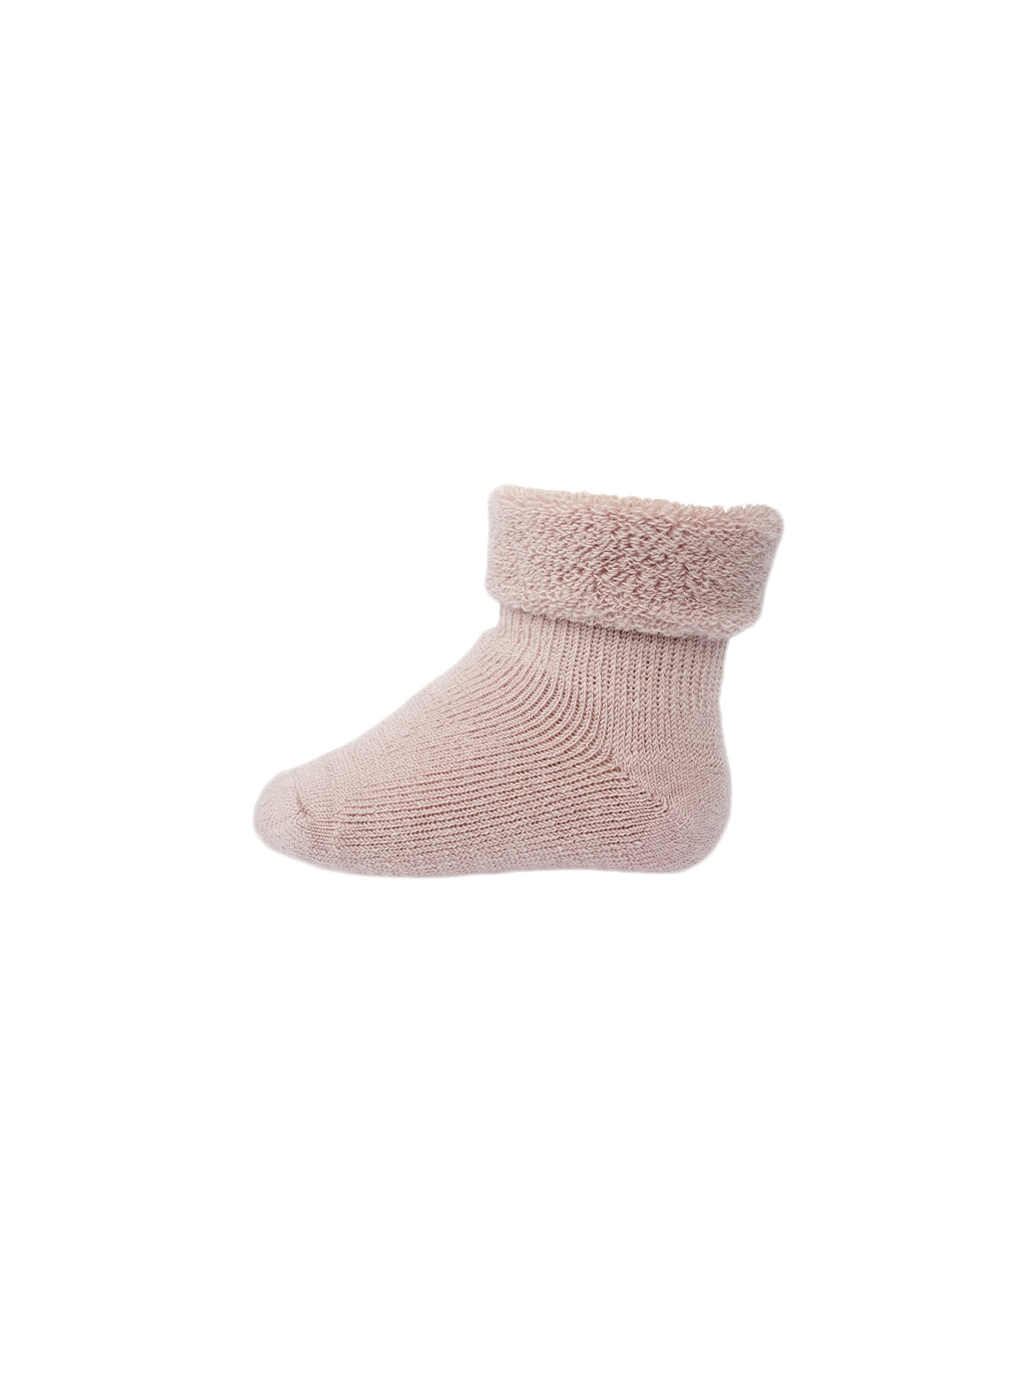 Merino wool terry socks